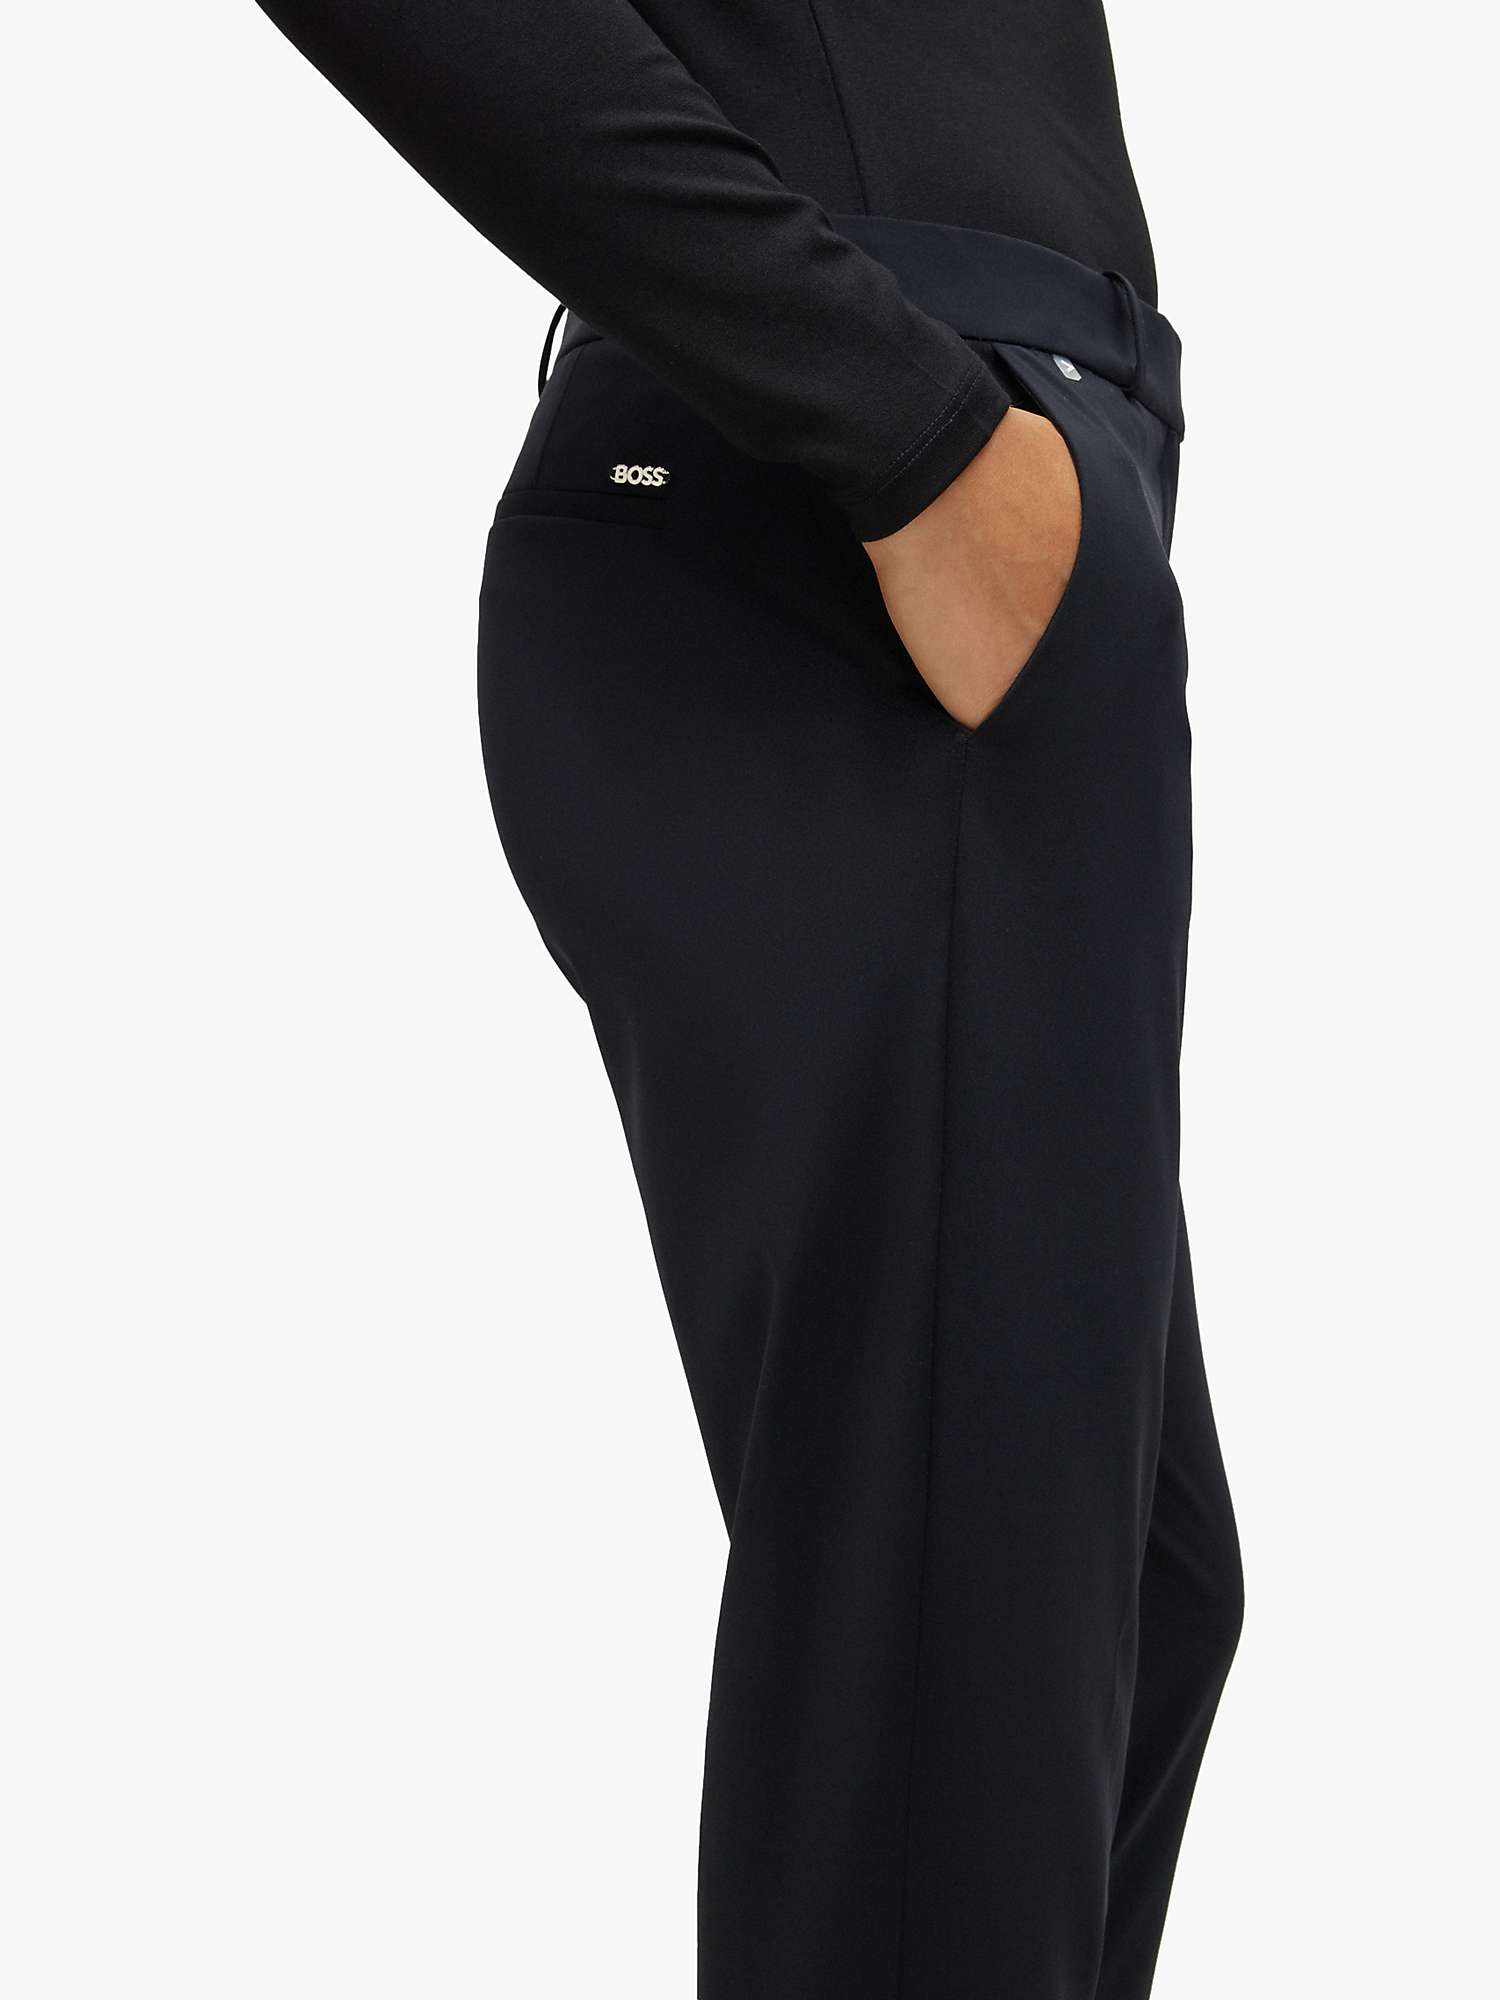 Buy HUGO BOSS Tobaluka Plain Tailored Trousers, Black Online at johnlewis.com